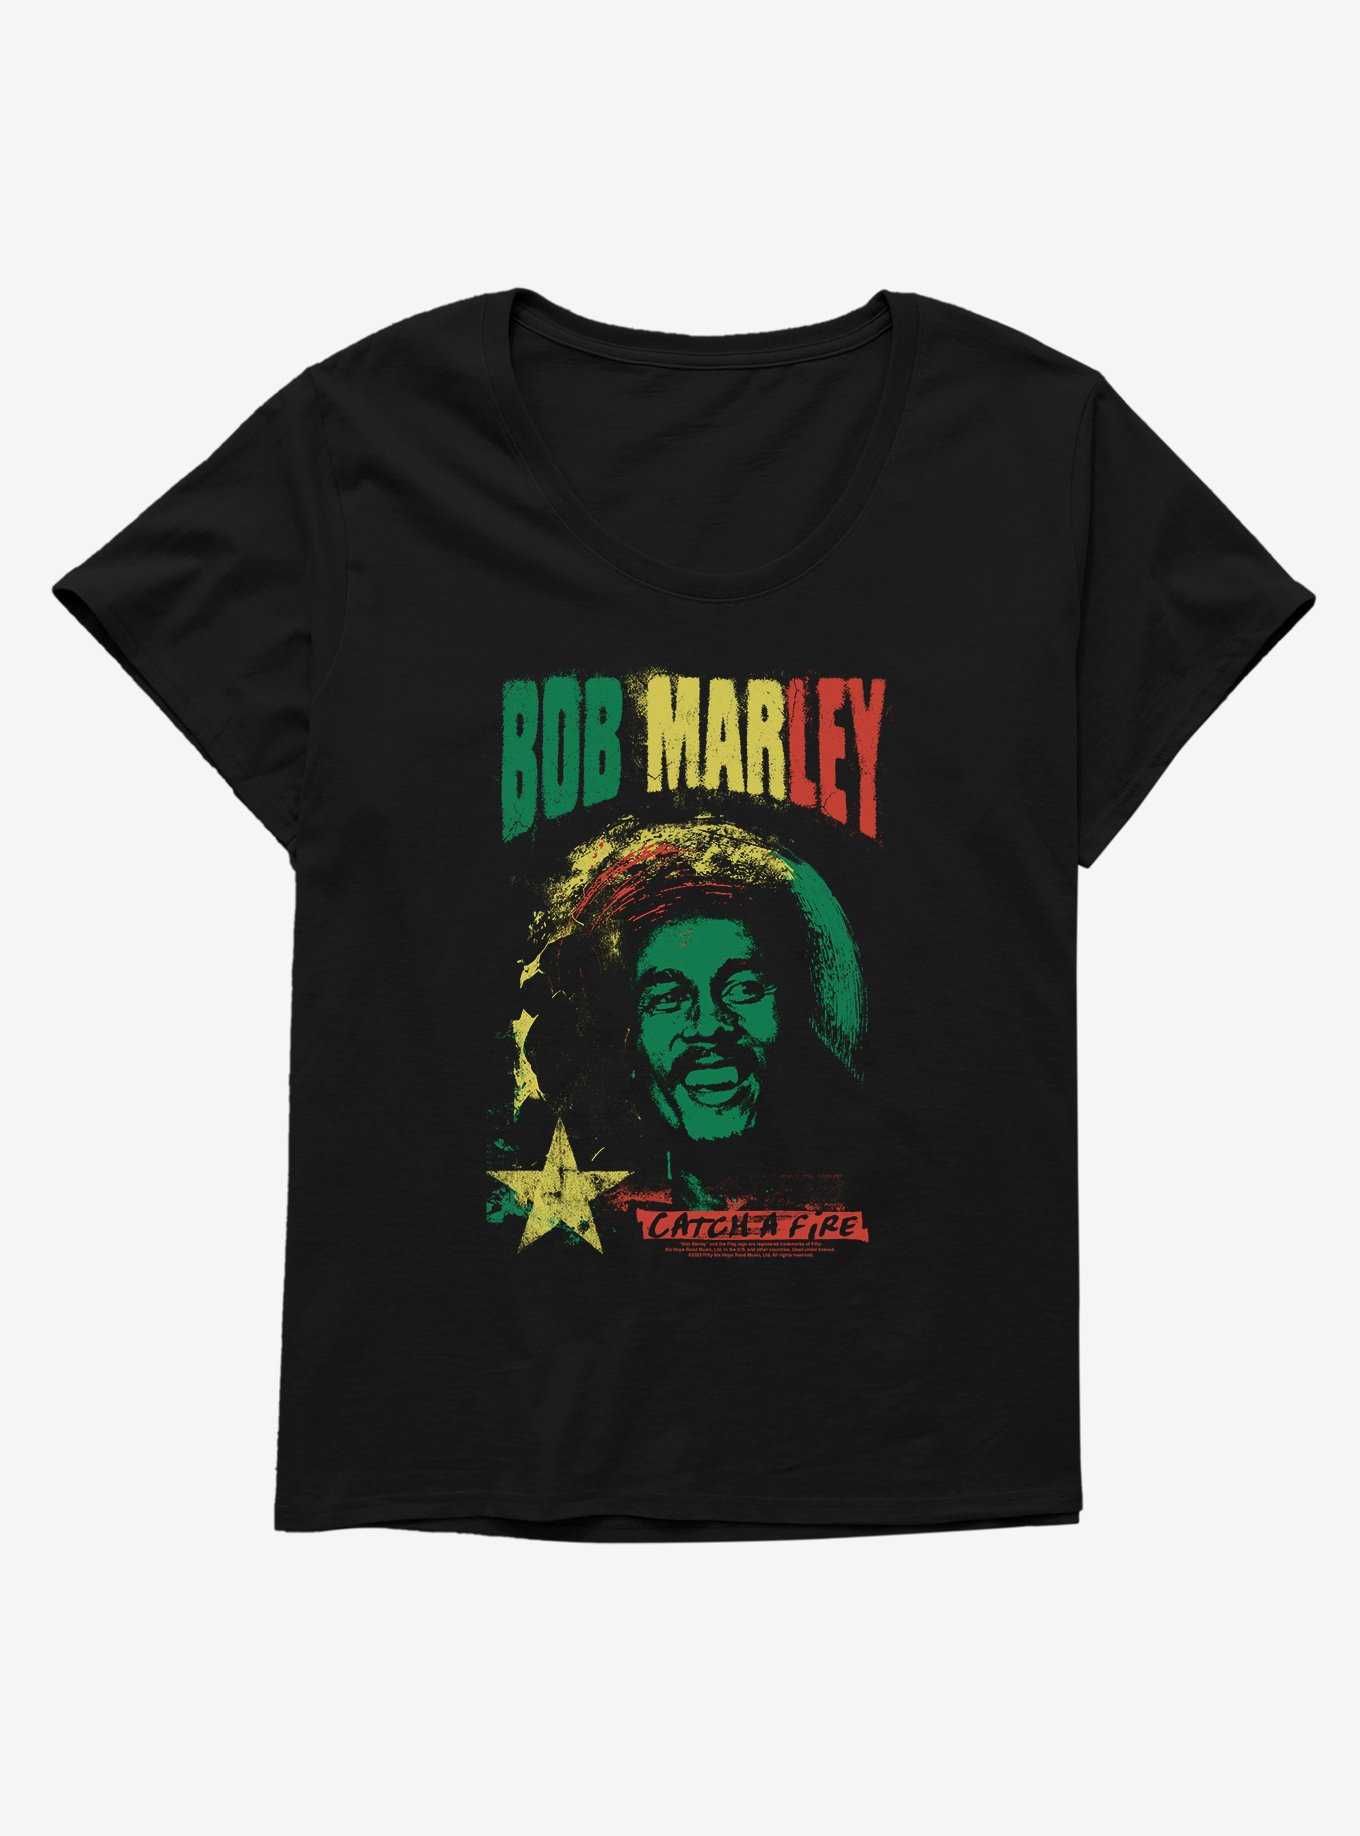 Bob Marley Catch A Fire Girls T-Shirt Plus Size, , hi-res